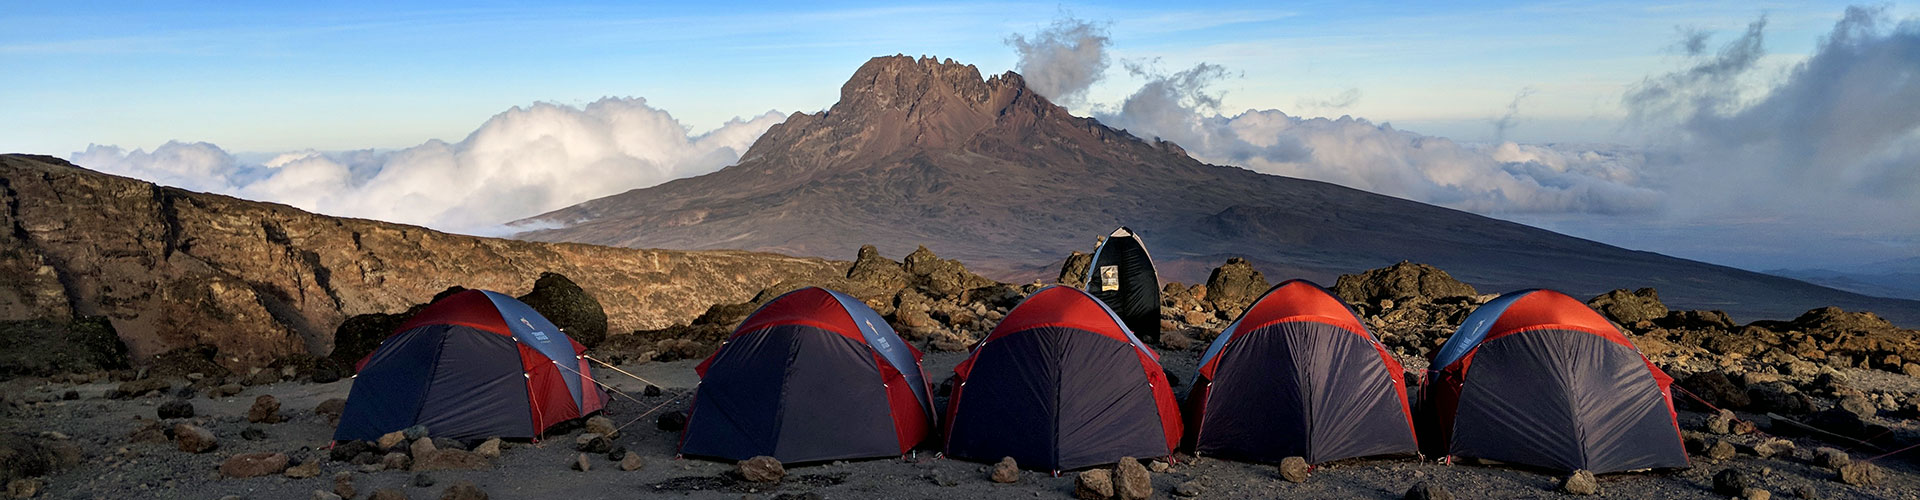 thomson kilimanjaro camp